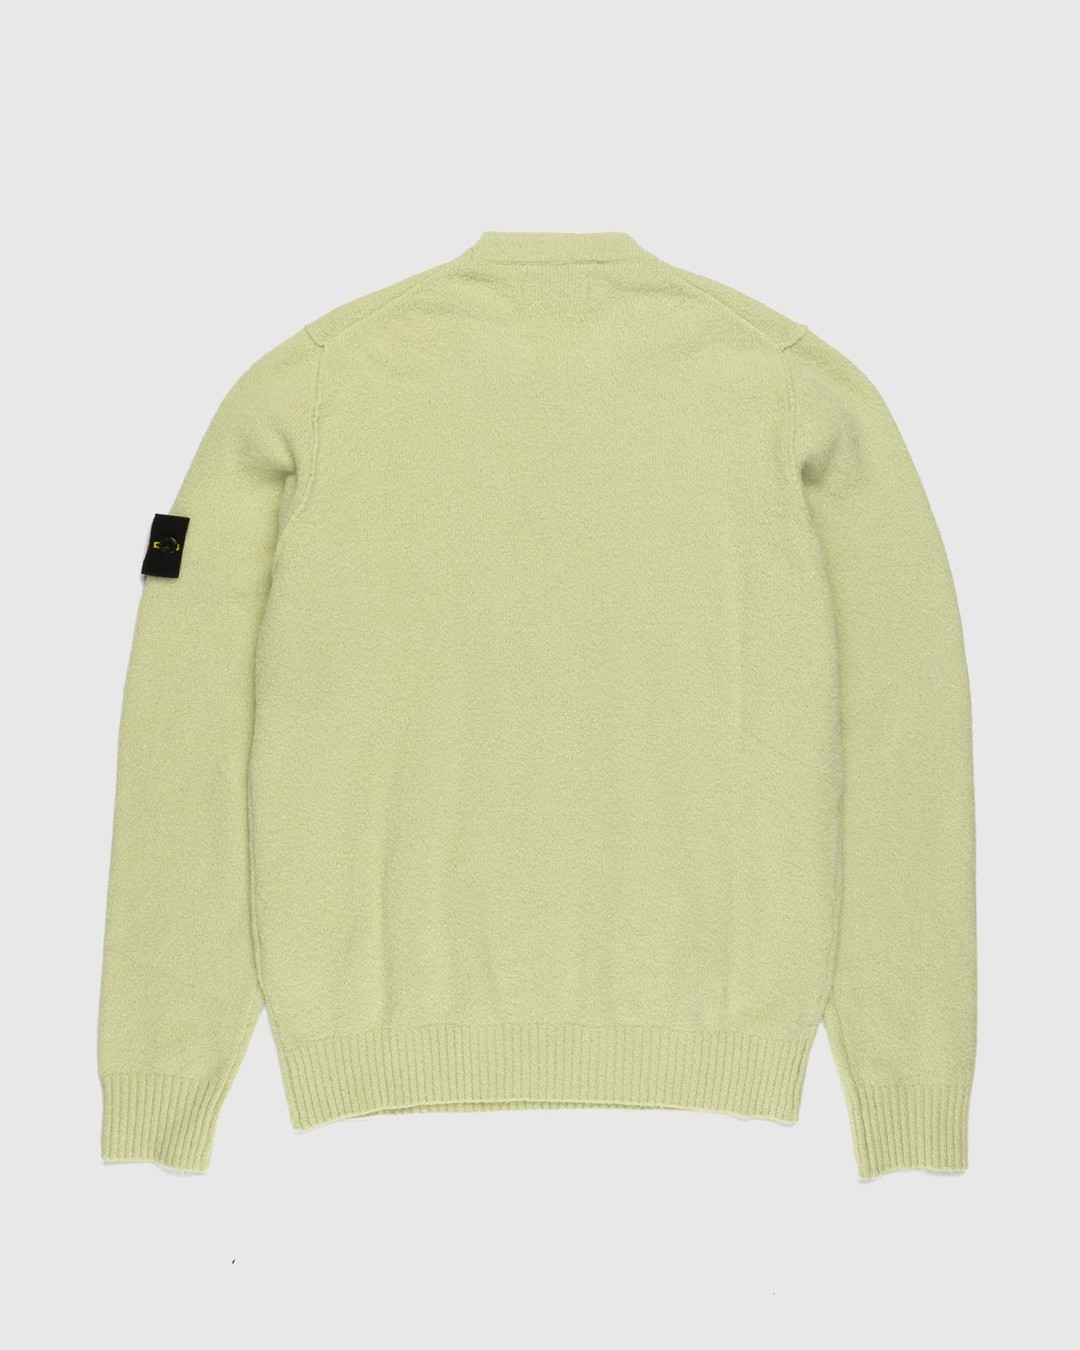 Stone Island – 548D2 Stockinette Stitch Sweater Light Green - Knitwear - Green - Image 2